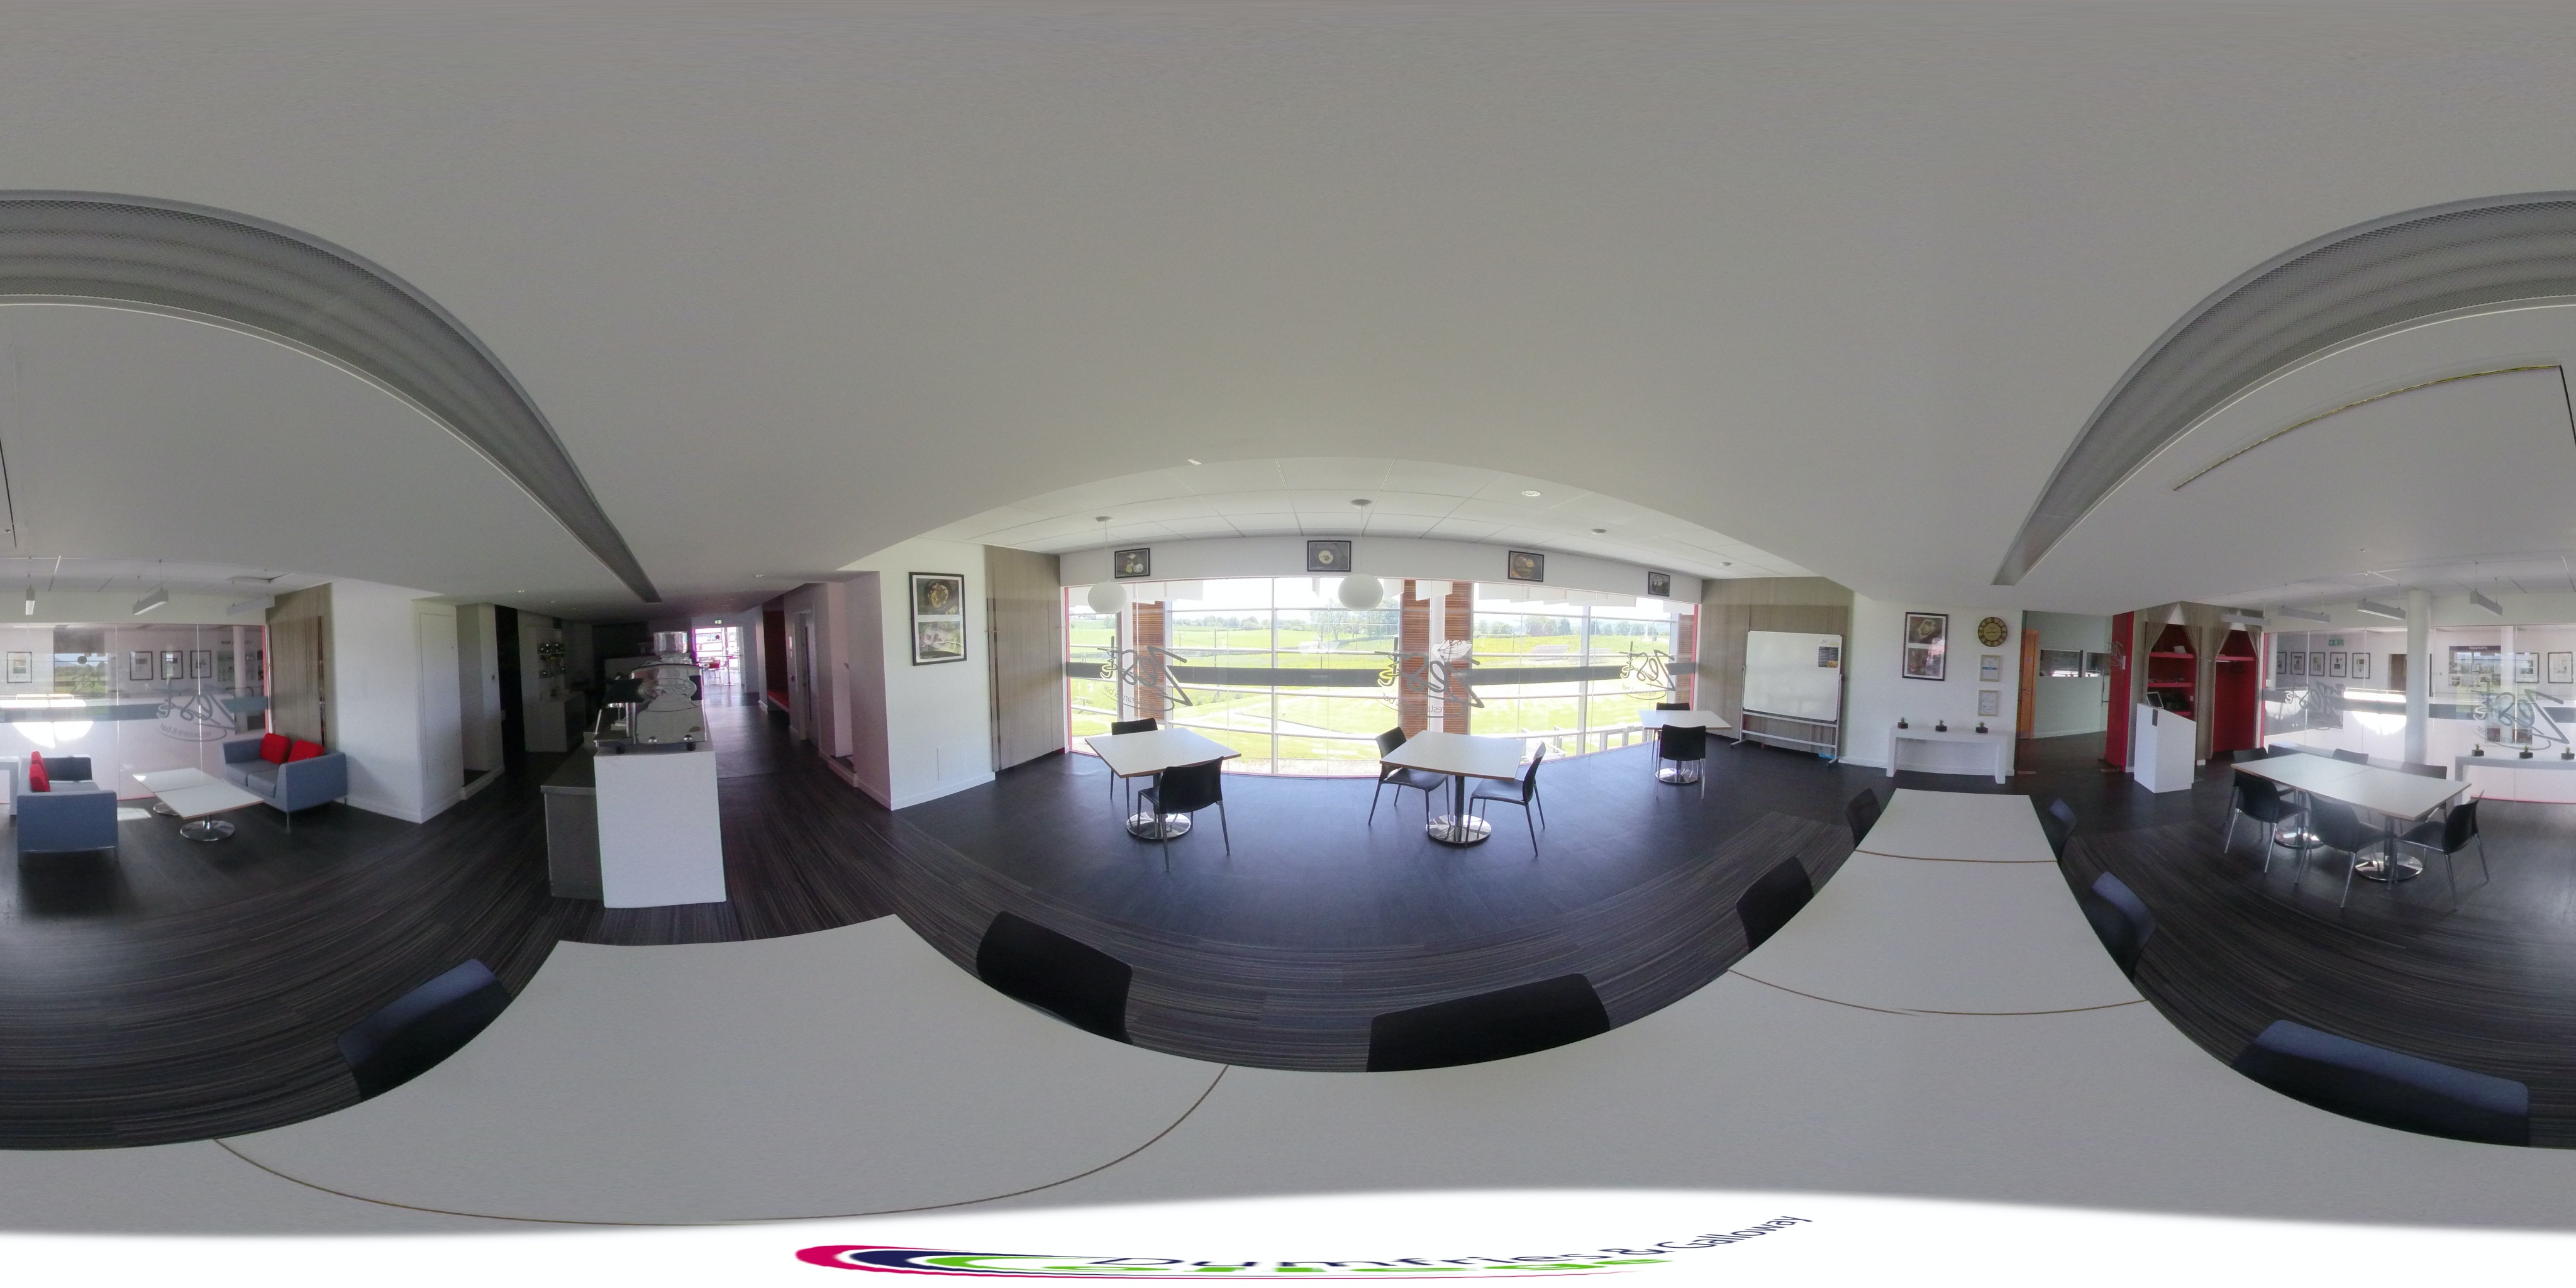 360 Photo of The College training restaurant, Zest (Dumfries)